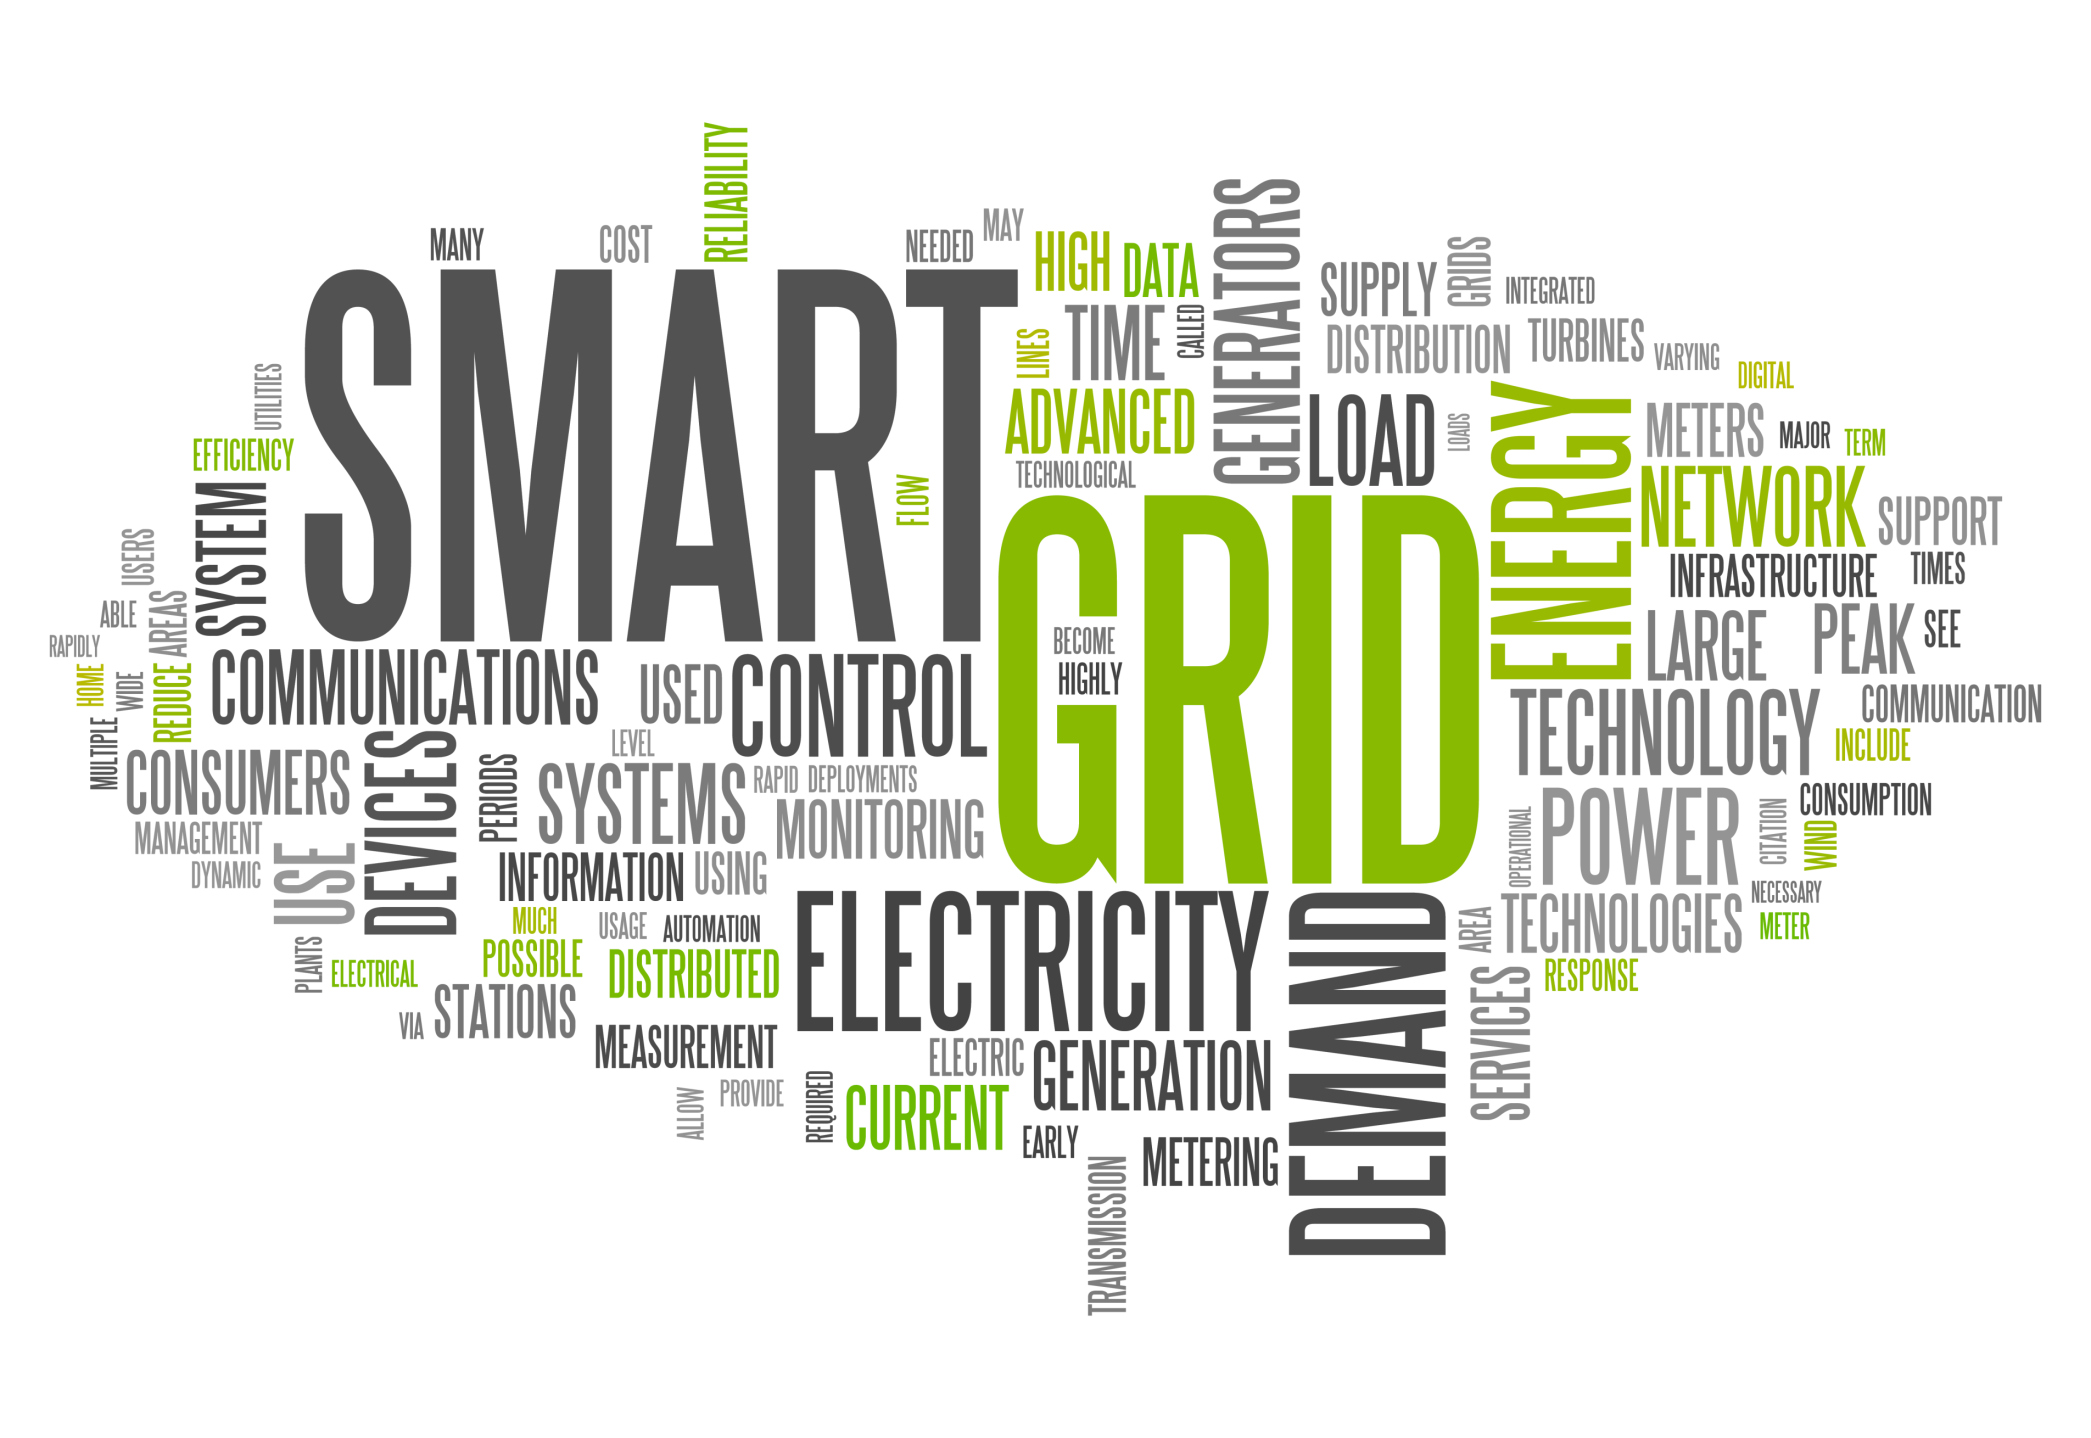 Smart grid